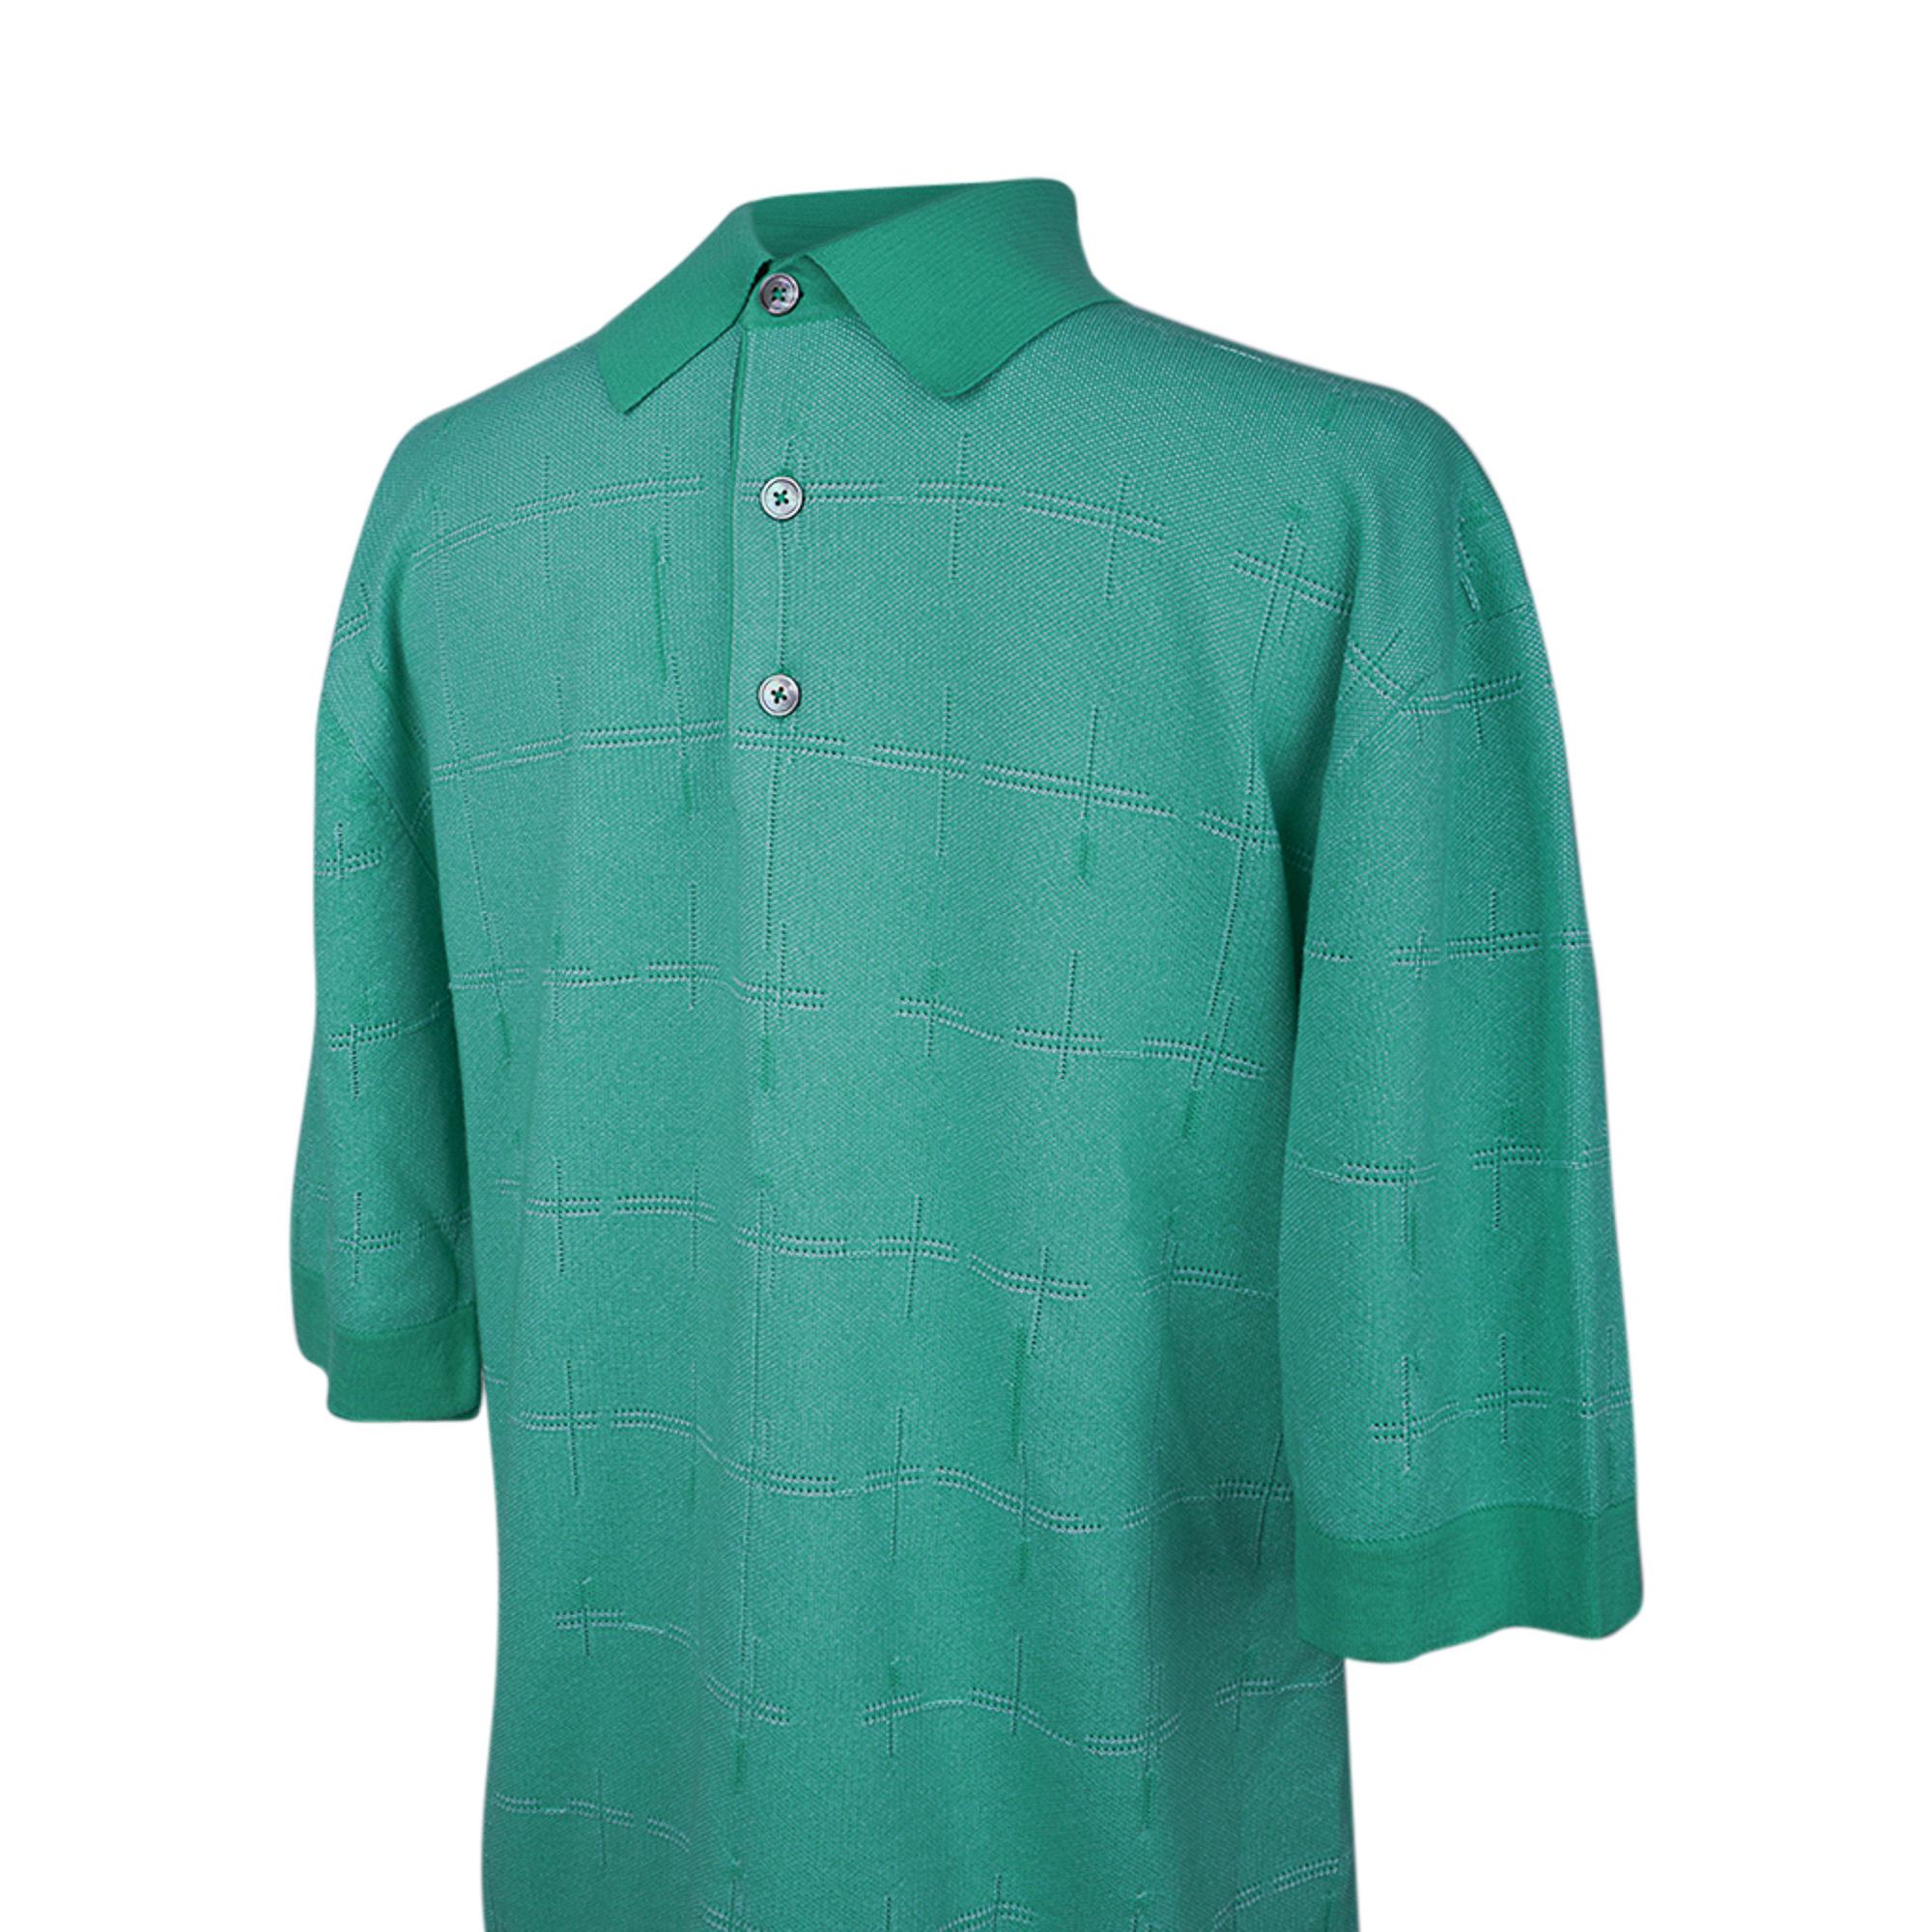 Blue Hermes Men's H en Carreaux Boxy Fit Polo Shirt Vert Tendre Short Sleeve M For Sale